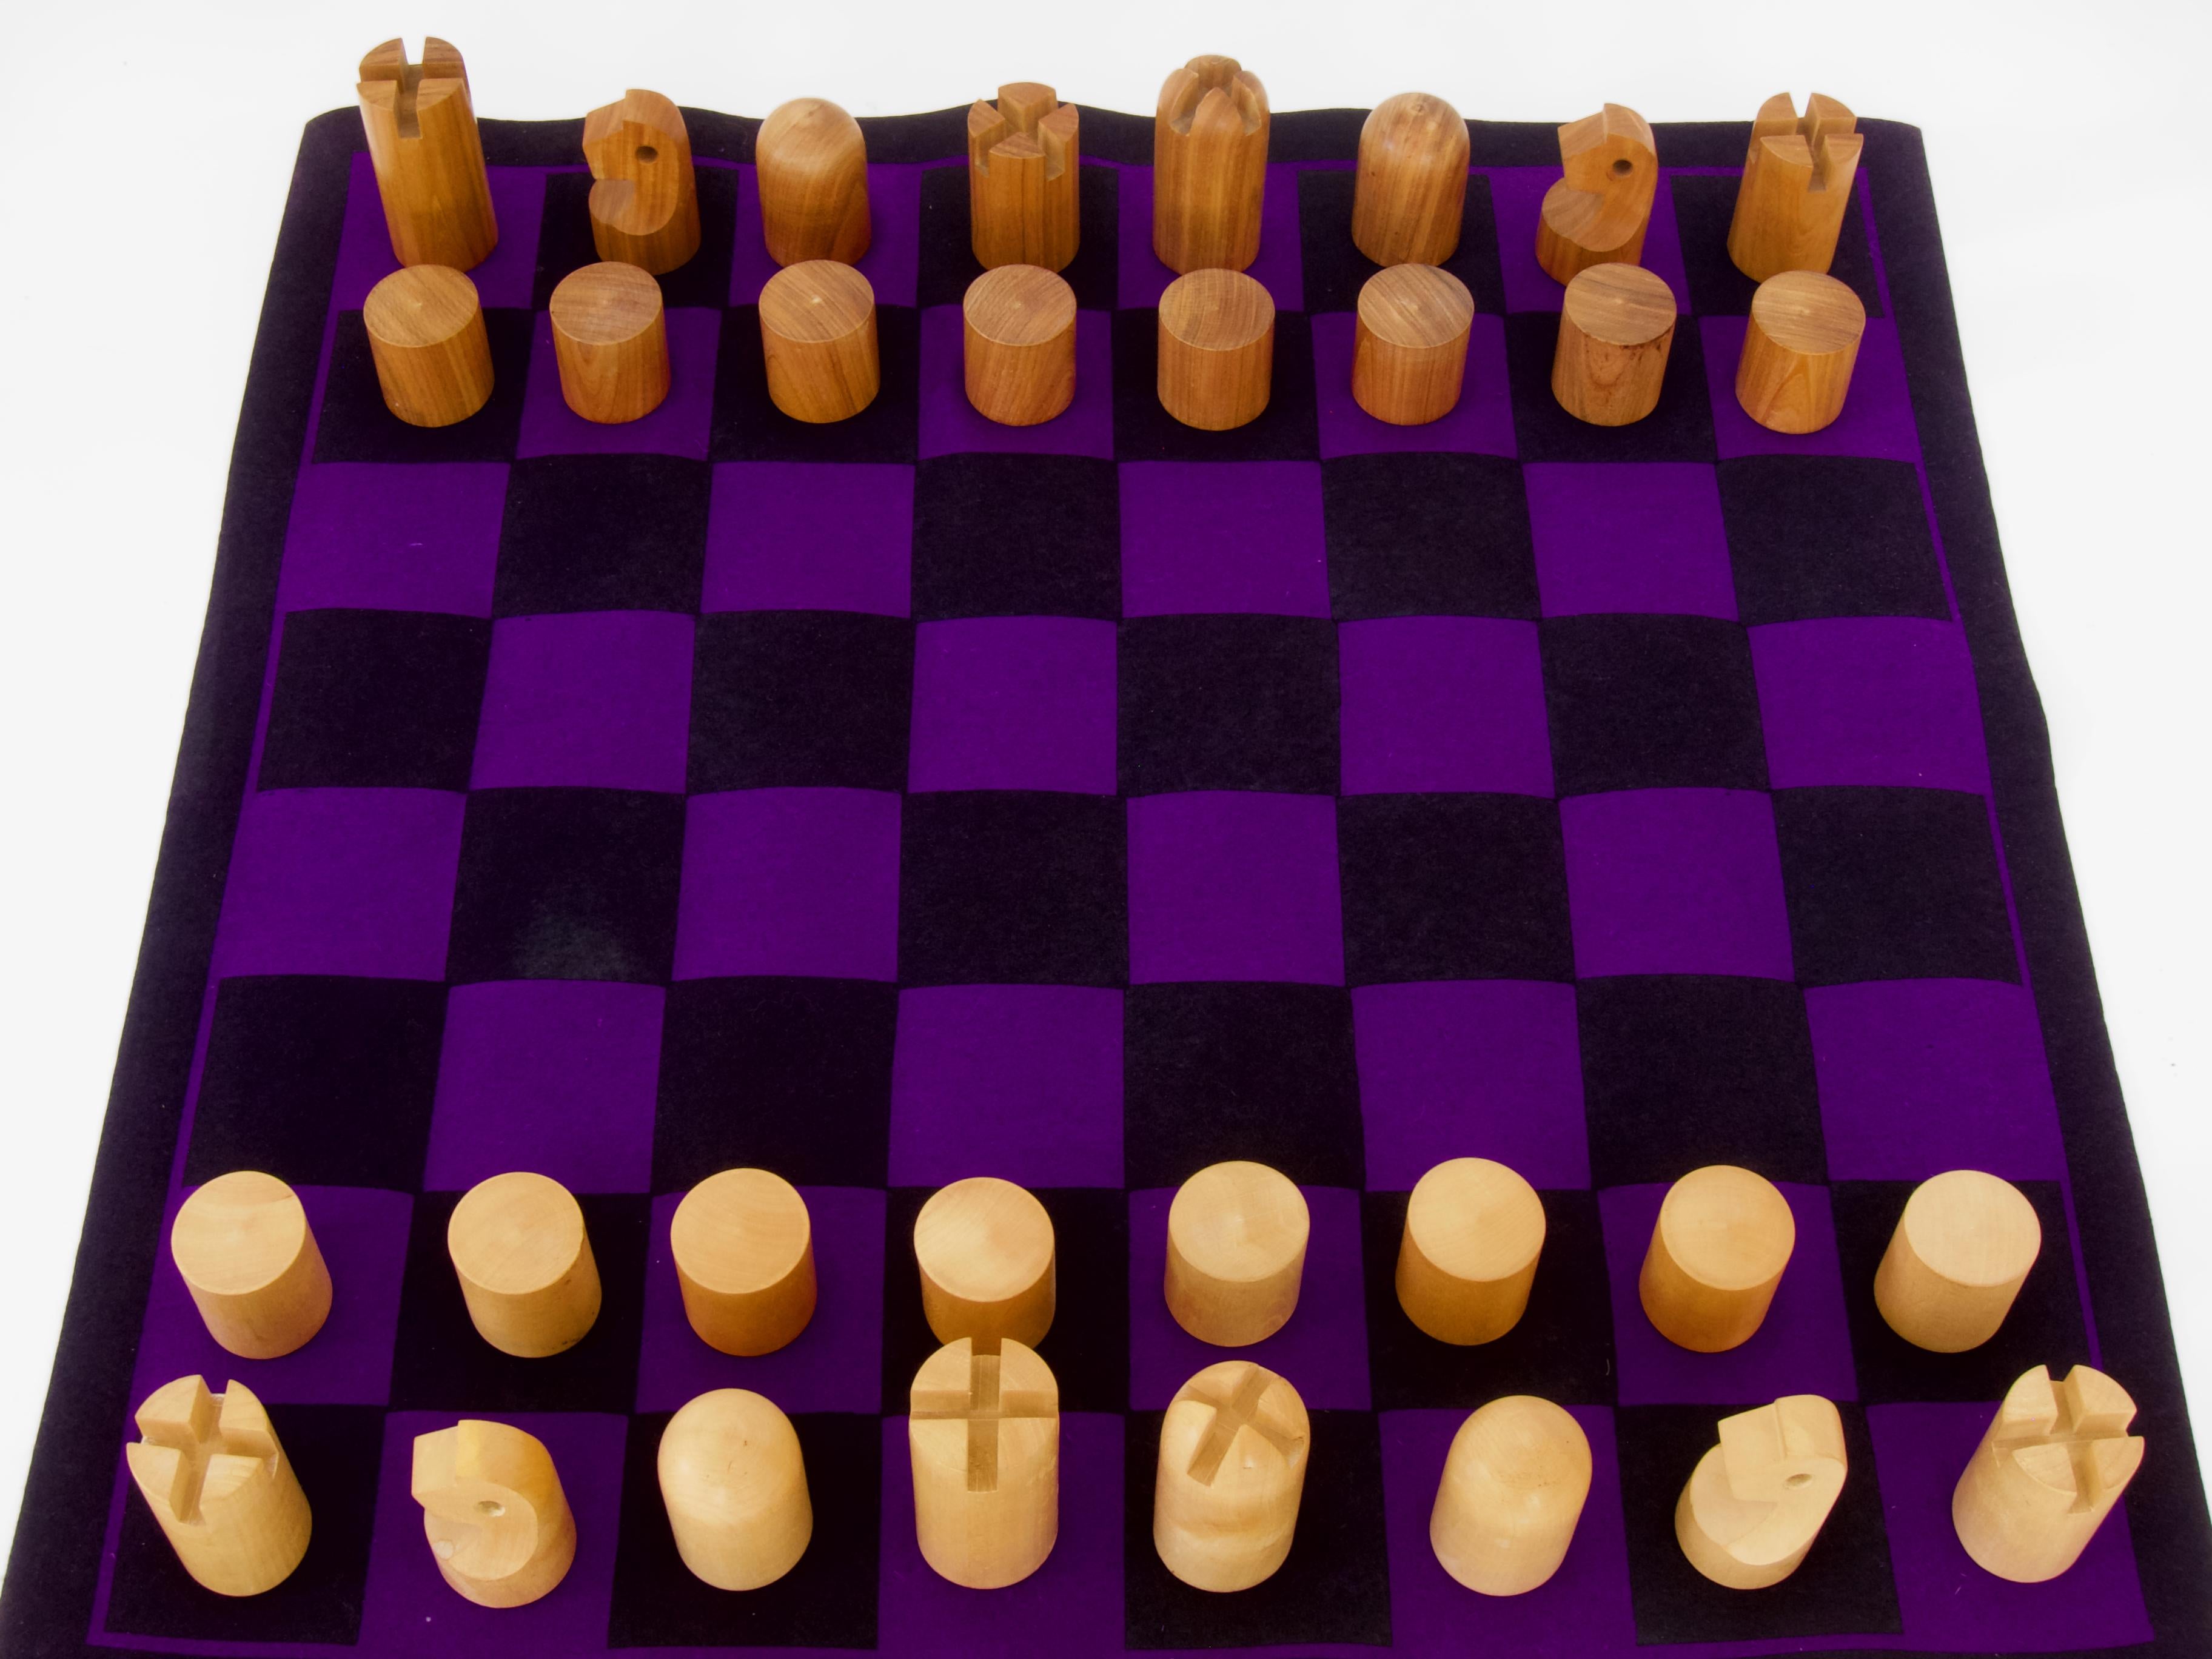 Rare, Minimalist wooden chess set # 5917,
circa 1960s by Carl Auböck for Werkstätte (workshop) Carl Auböck, Vienna

Rosewood / beech

Comes with a purple felt 